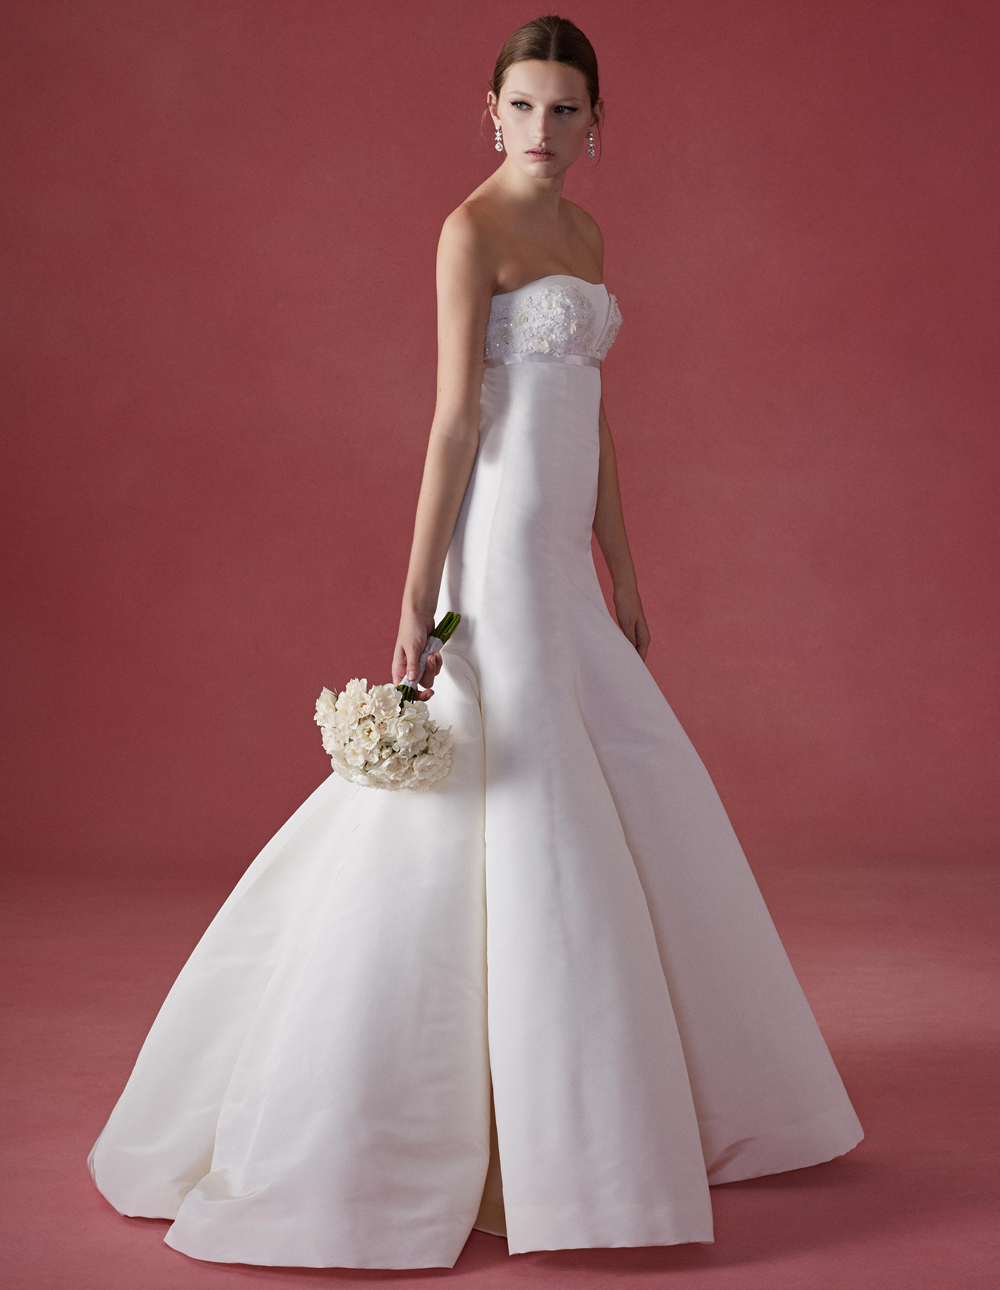 See Oscar de la Renta's Fall 2016 Wedding Dress Collection In Its